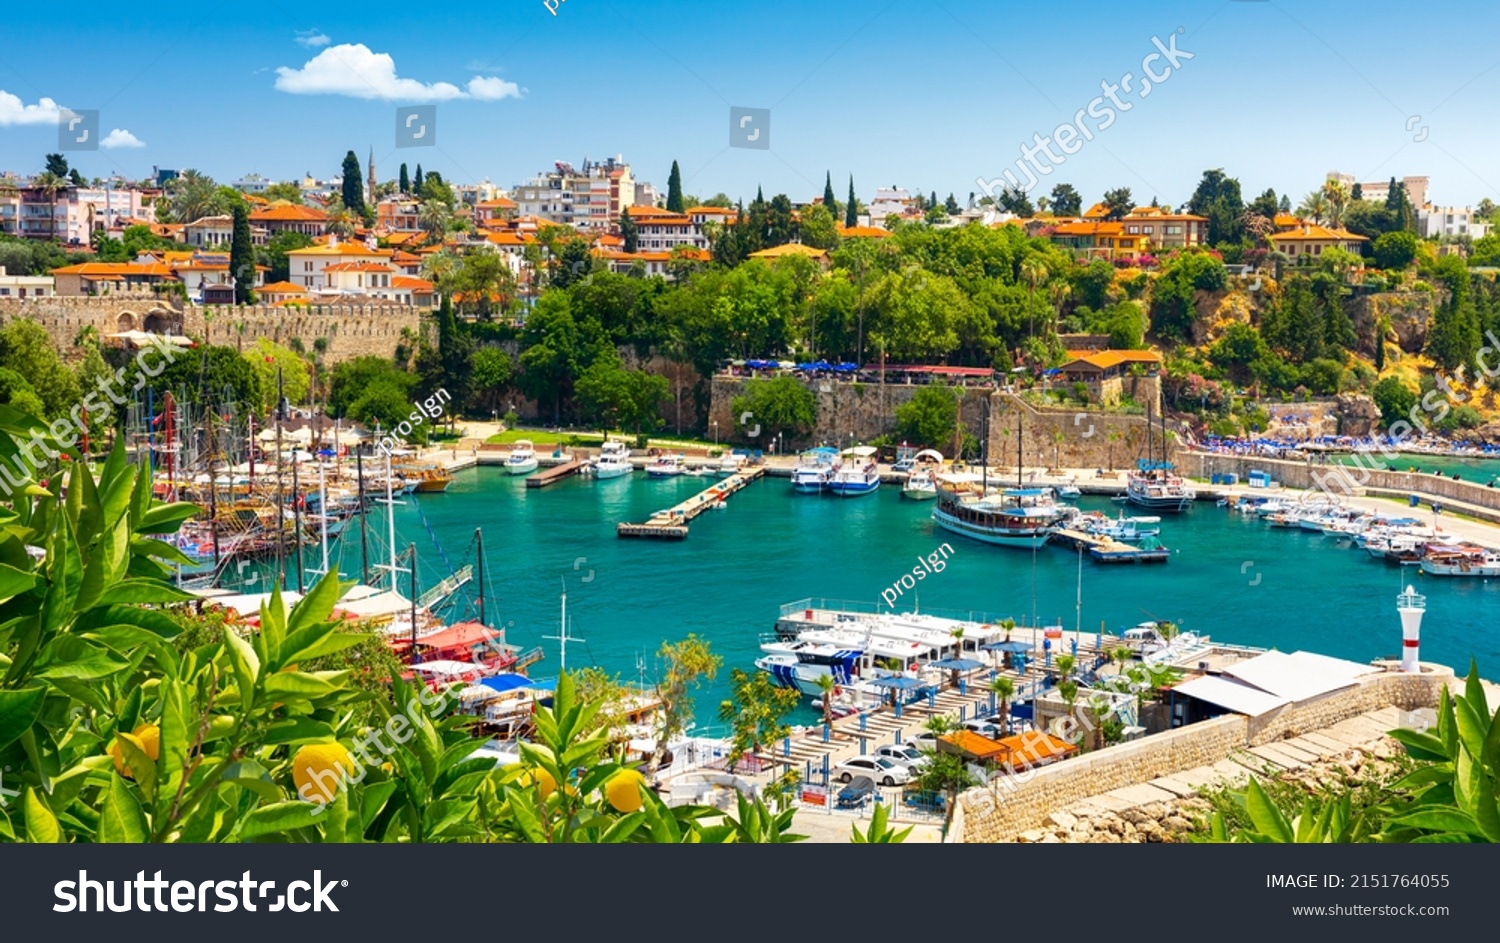 Harbor in the old city of Antalya Kaleici Old Town. Antalya, Turkey #2151764055